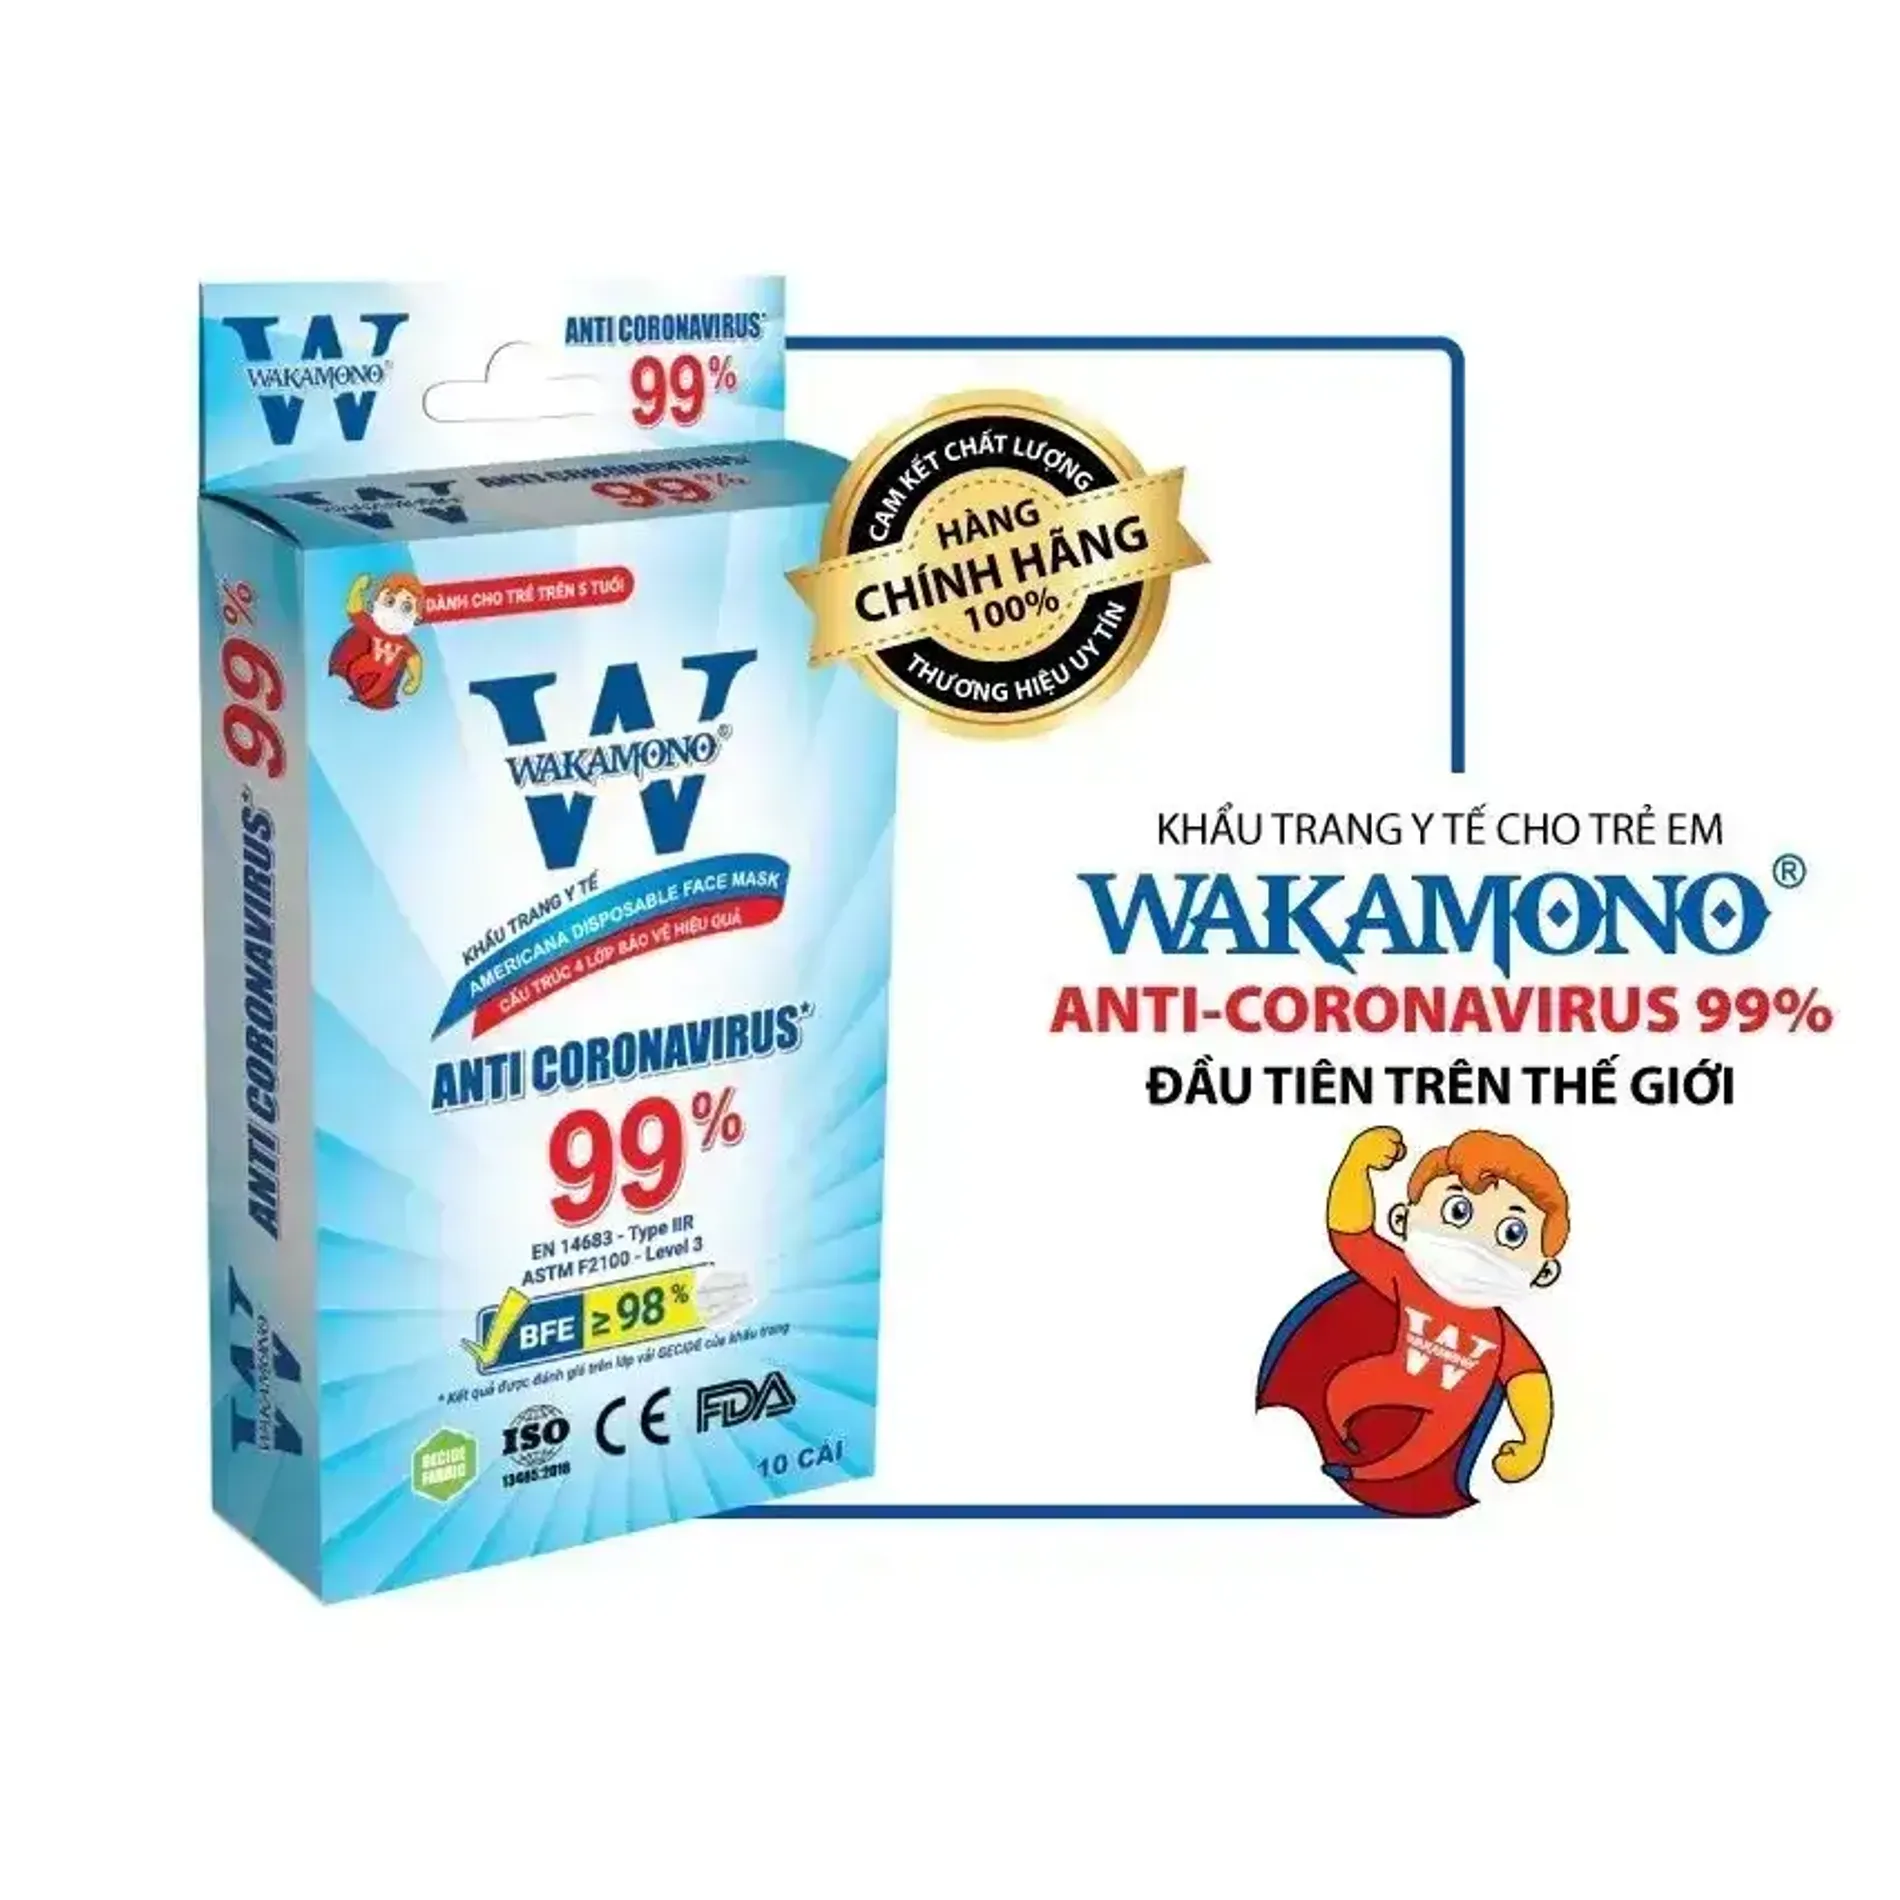 kha-u-trang-y-te-diet-khuan-99-wakamono-americana-disposable-face-mask-kids-hop-10-cai-1